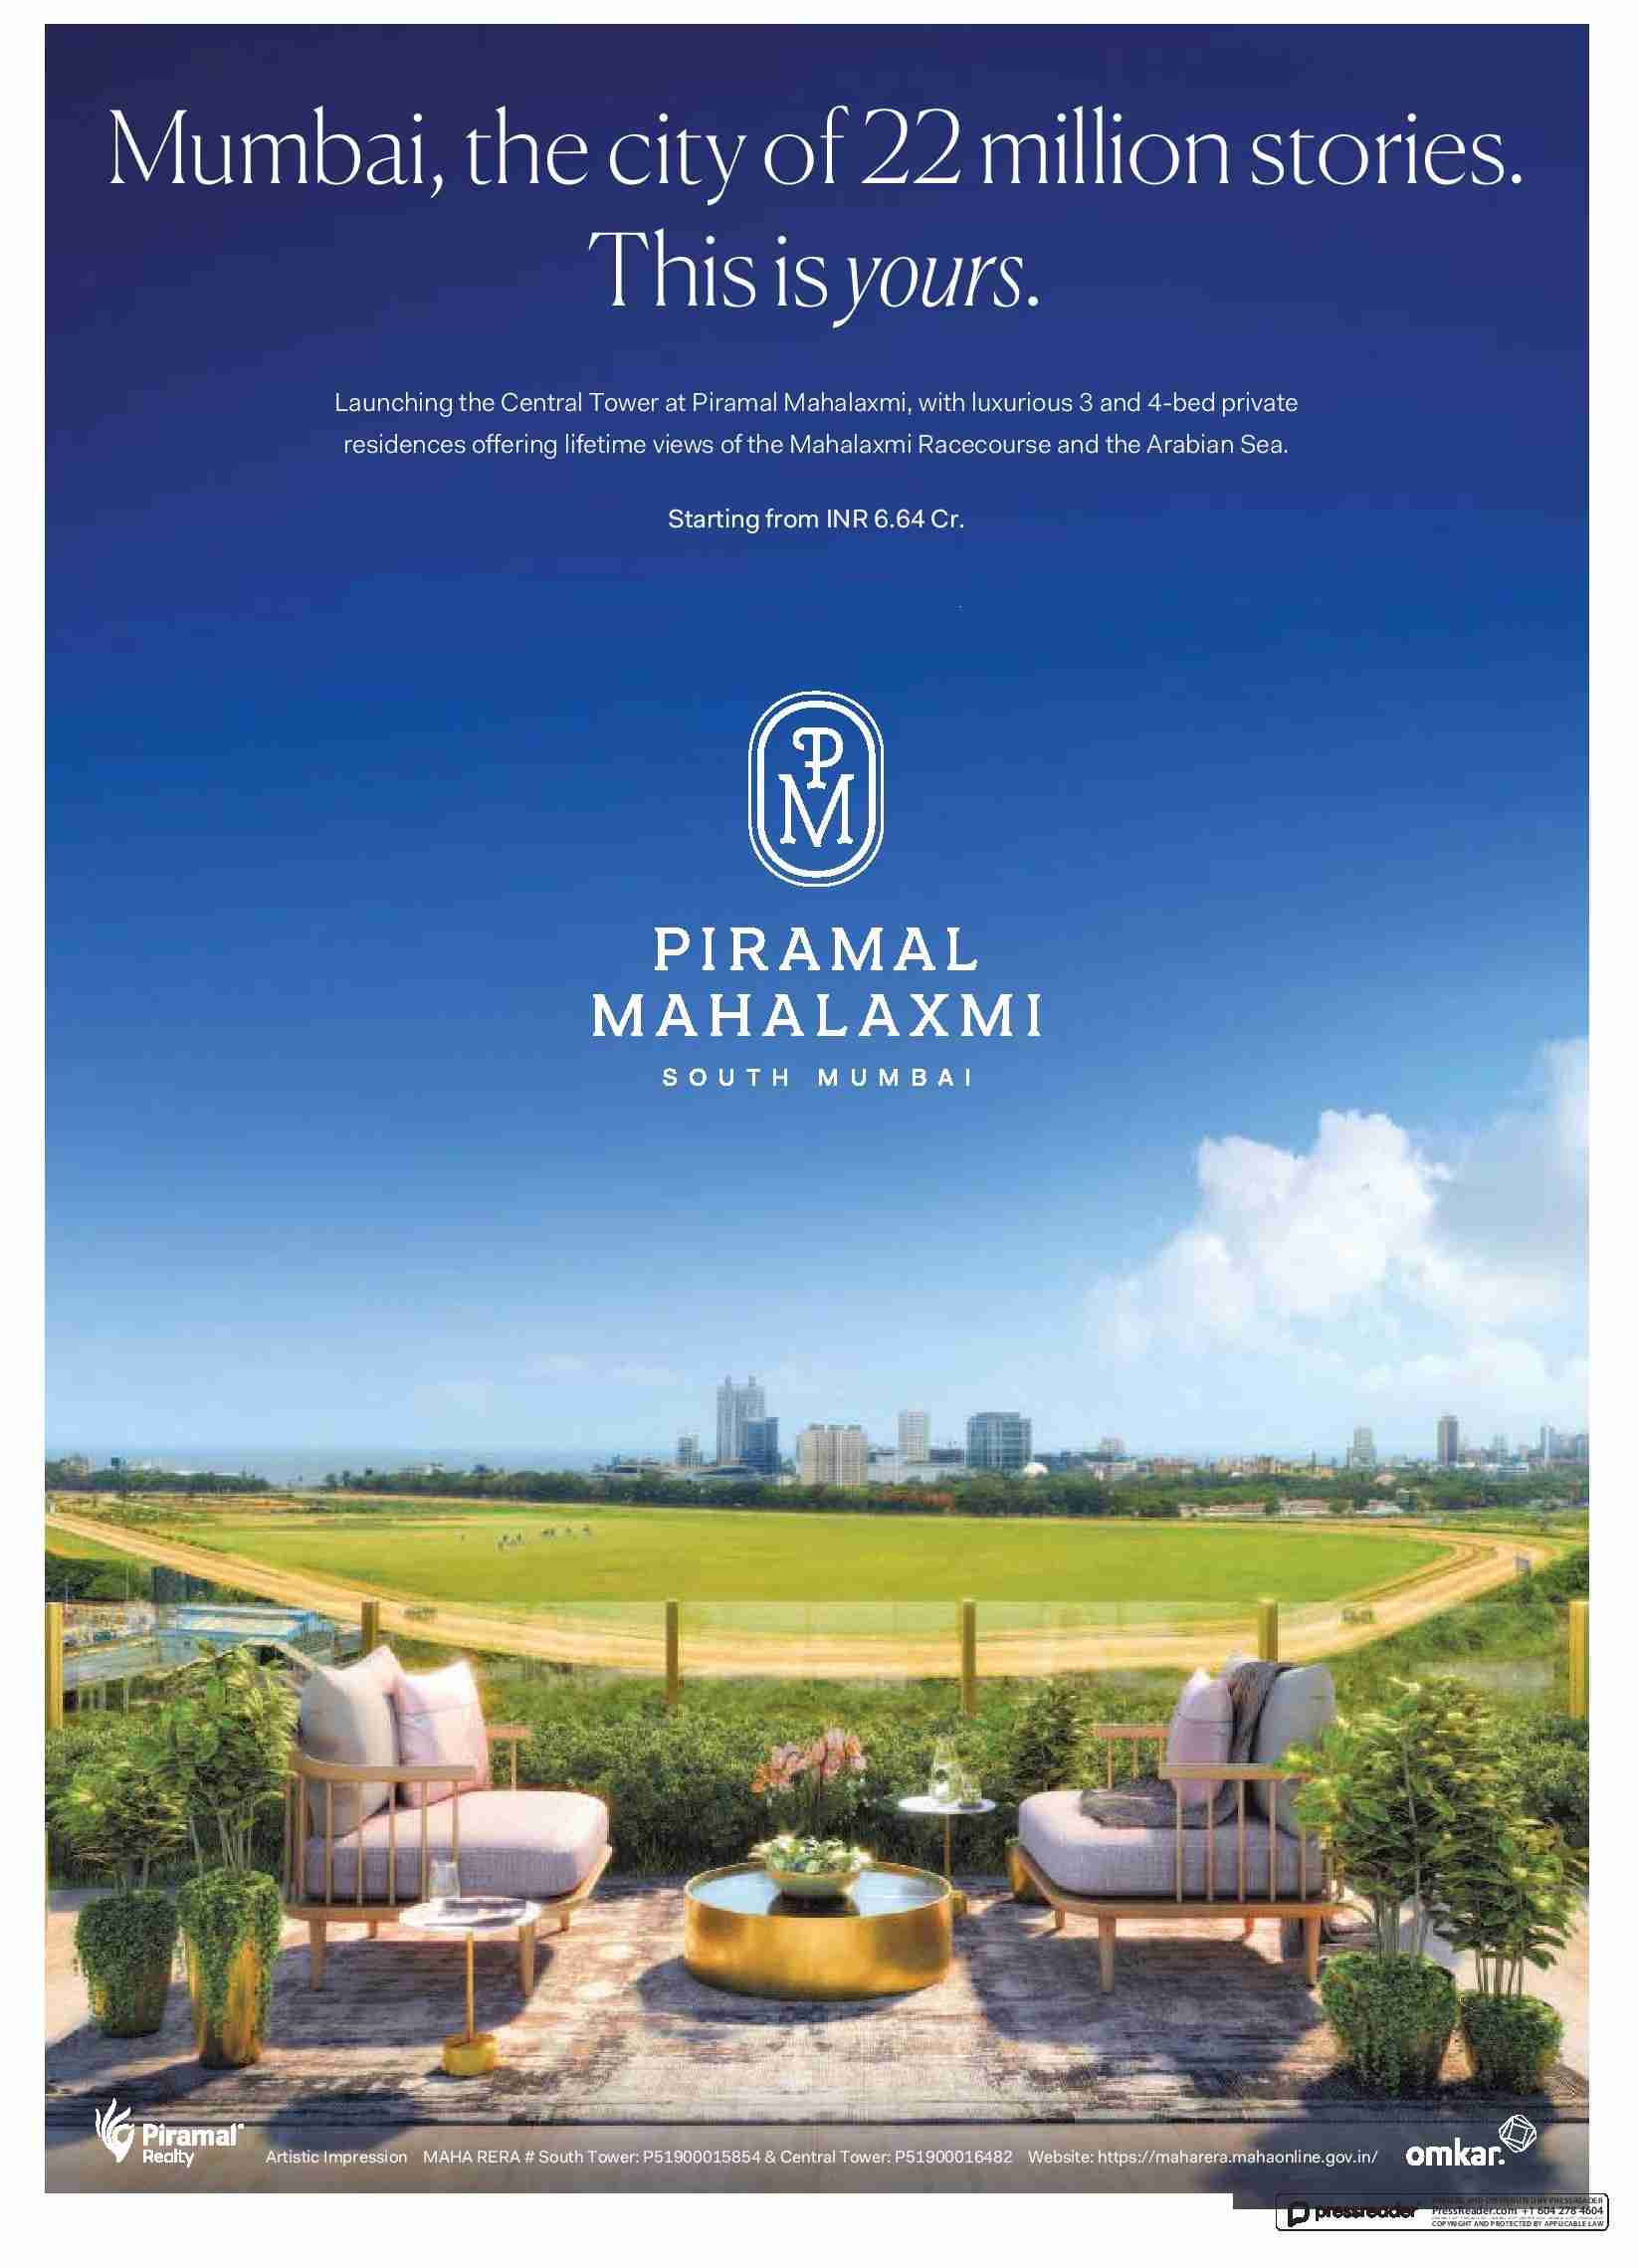 Launching the Central Tower at Piramal Mahalaxmi in Mumbai Update